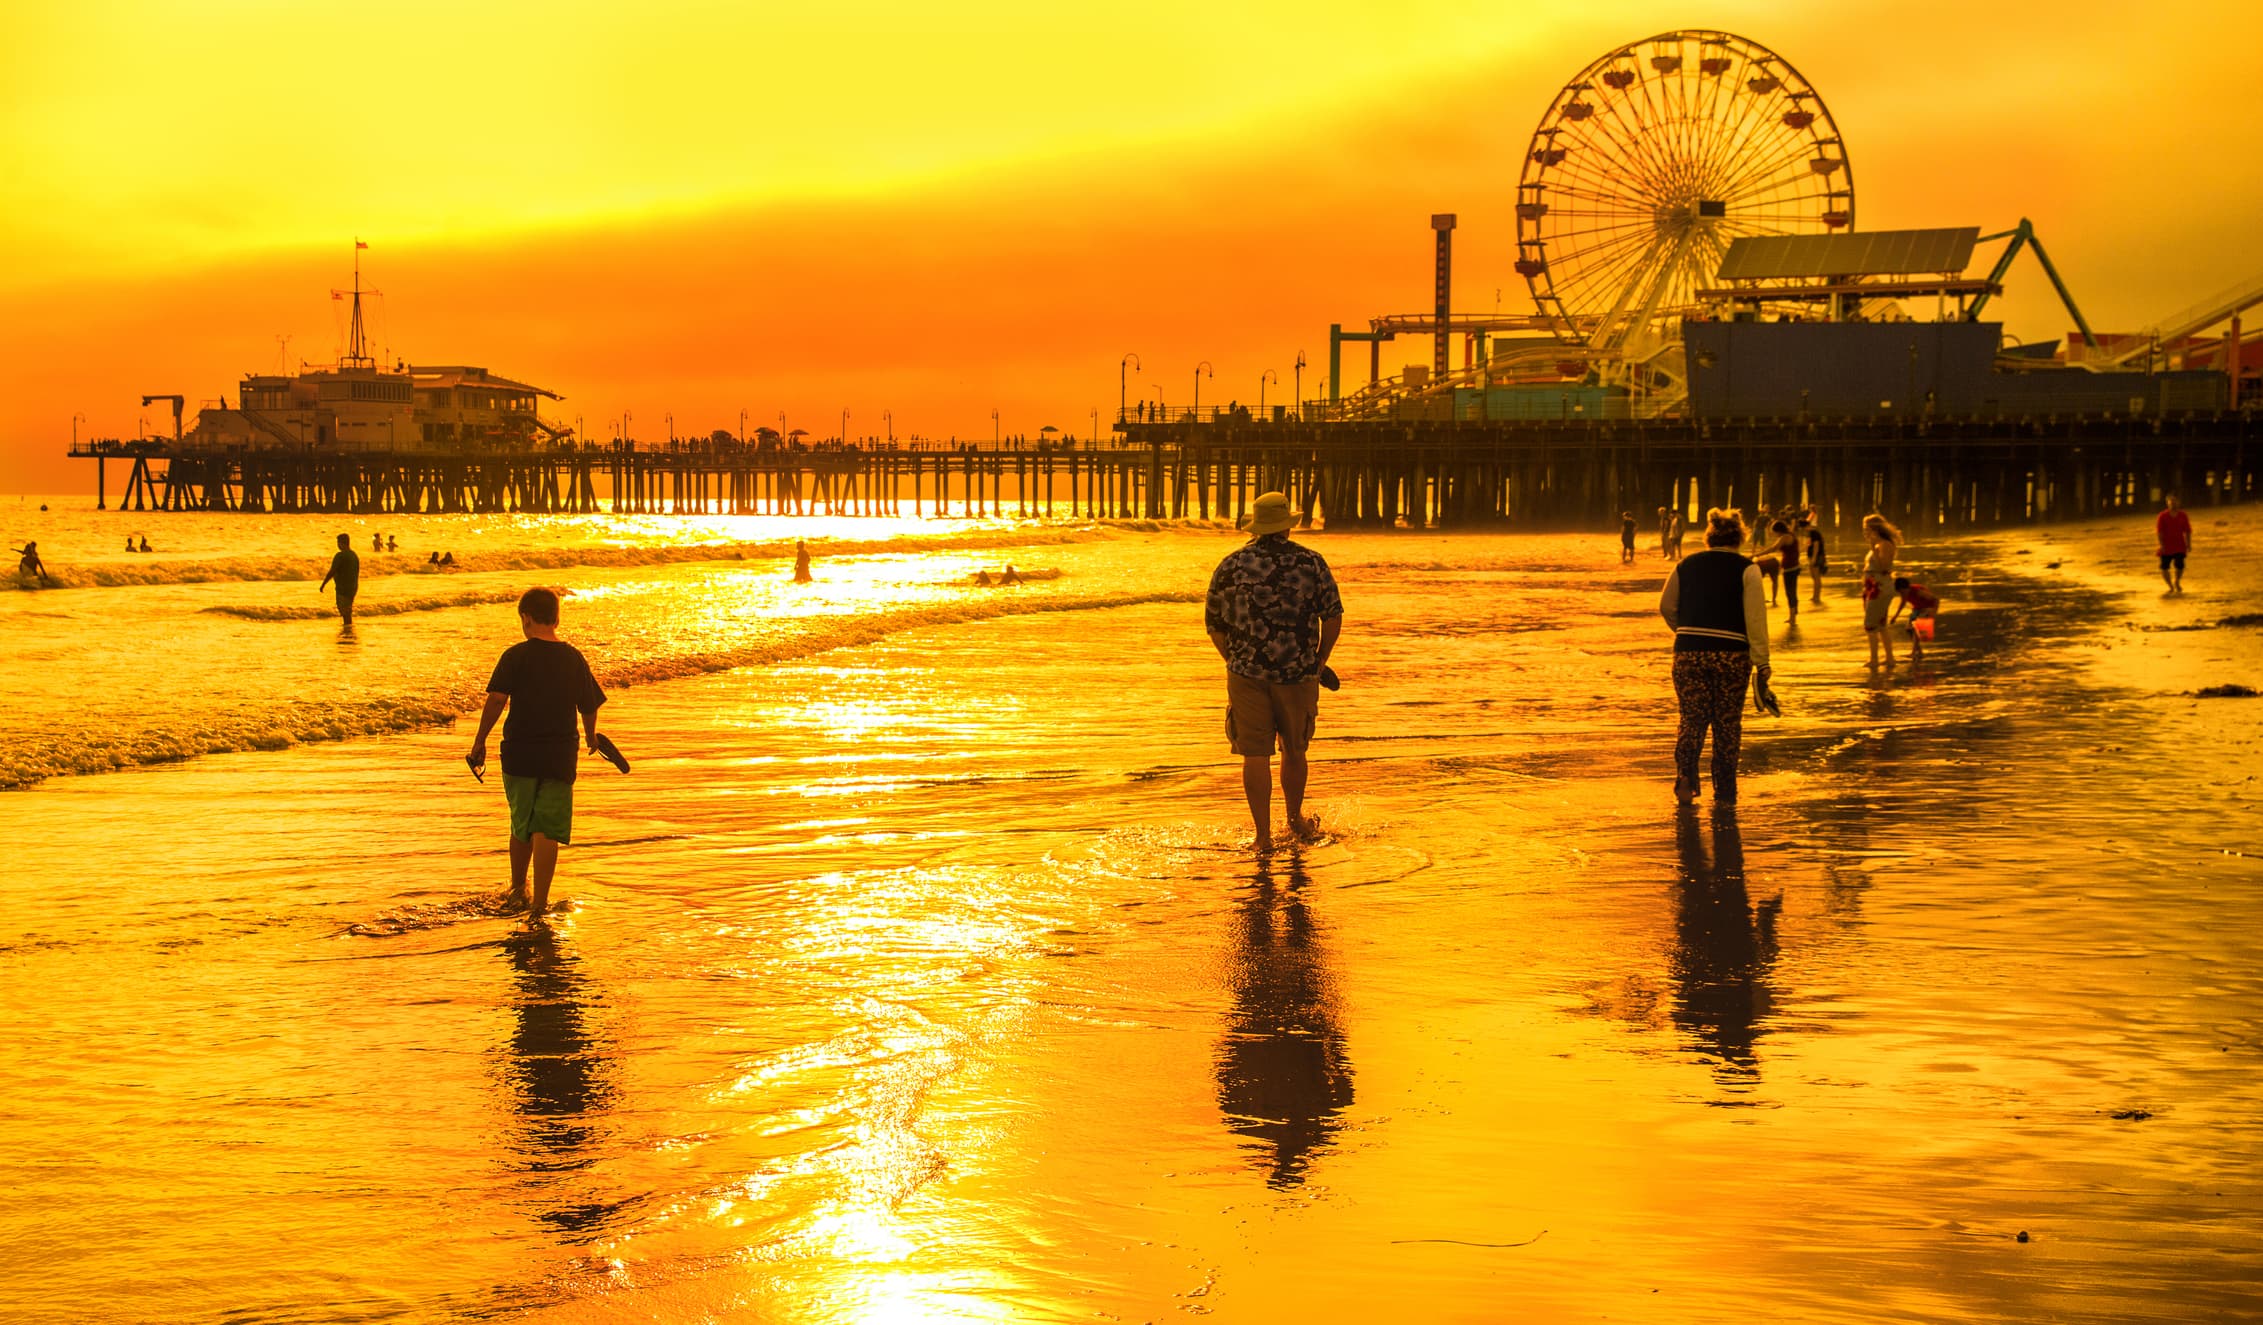 View of the sun setting behind Santa Monica beach and pier